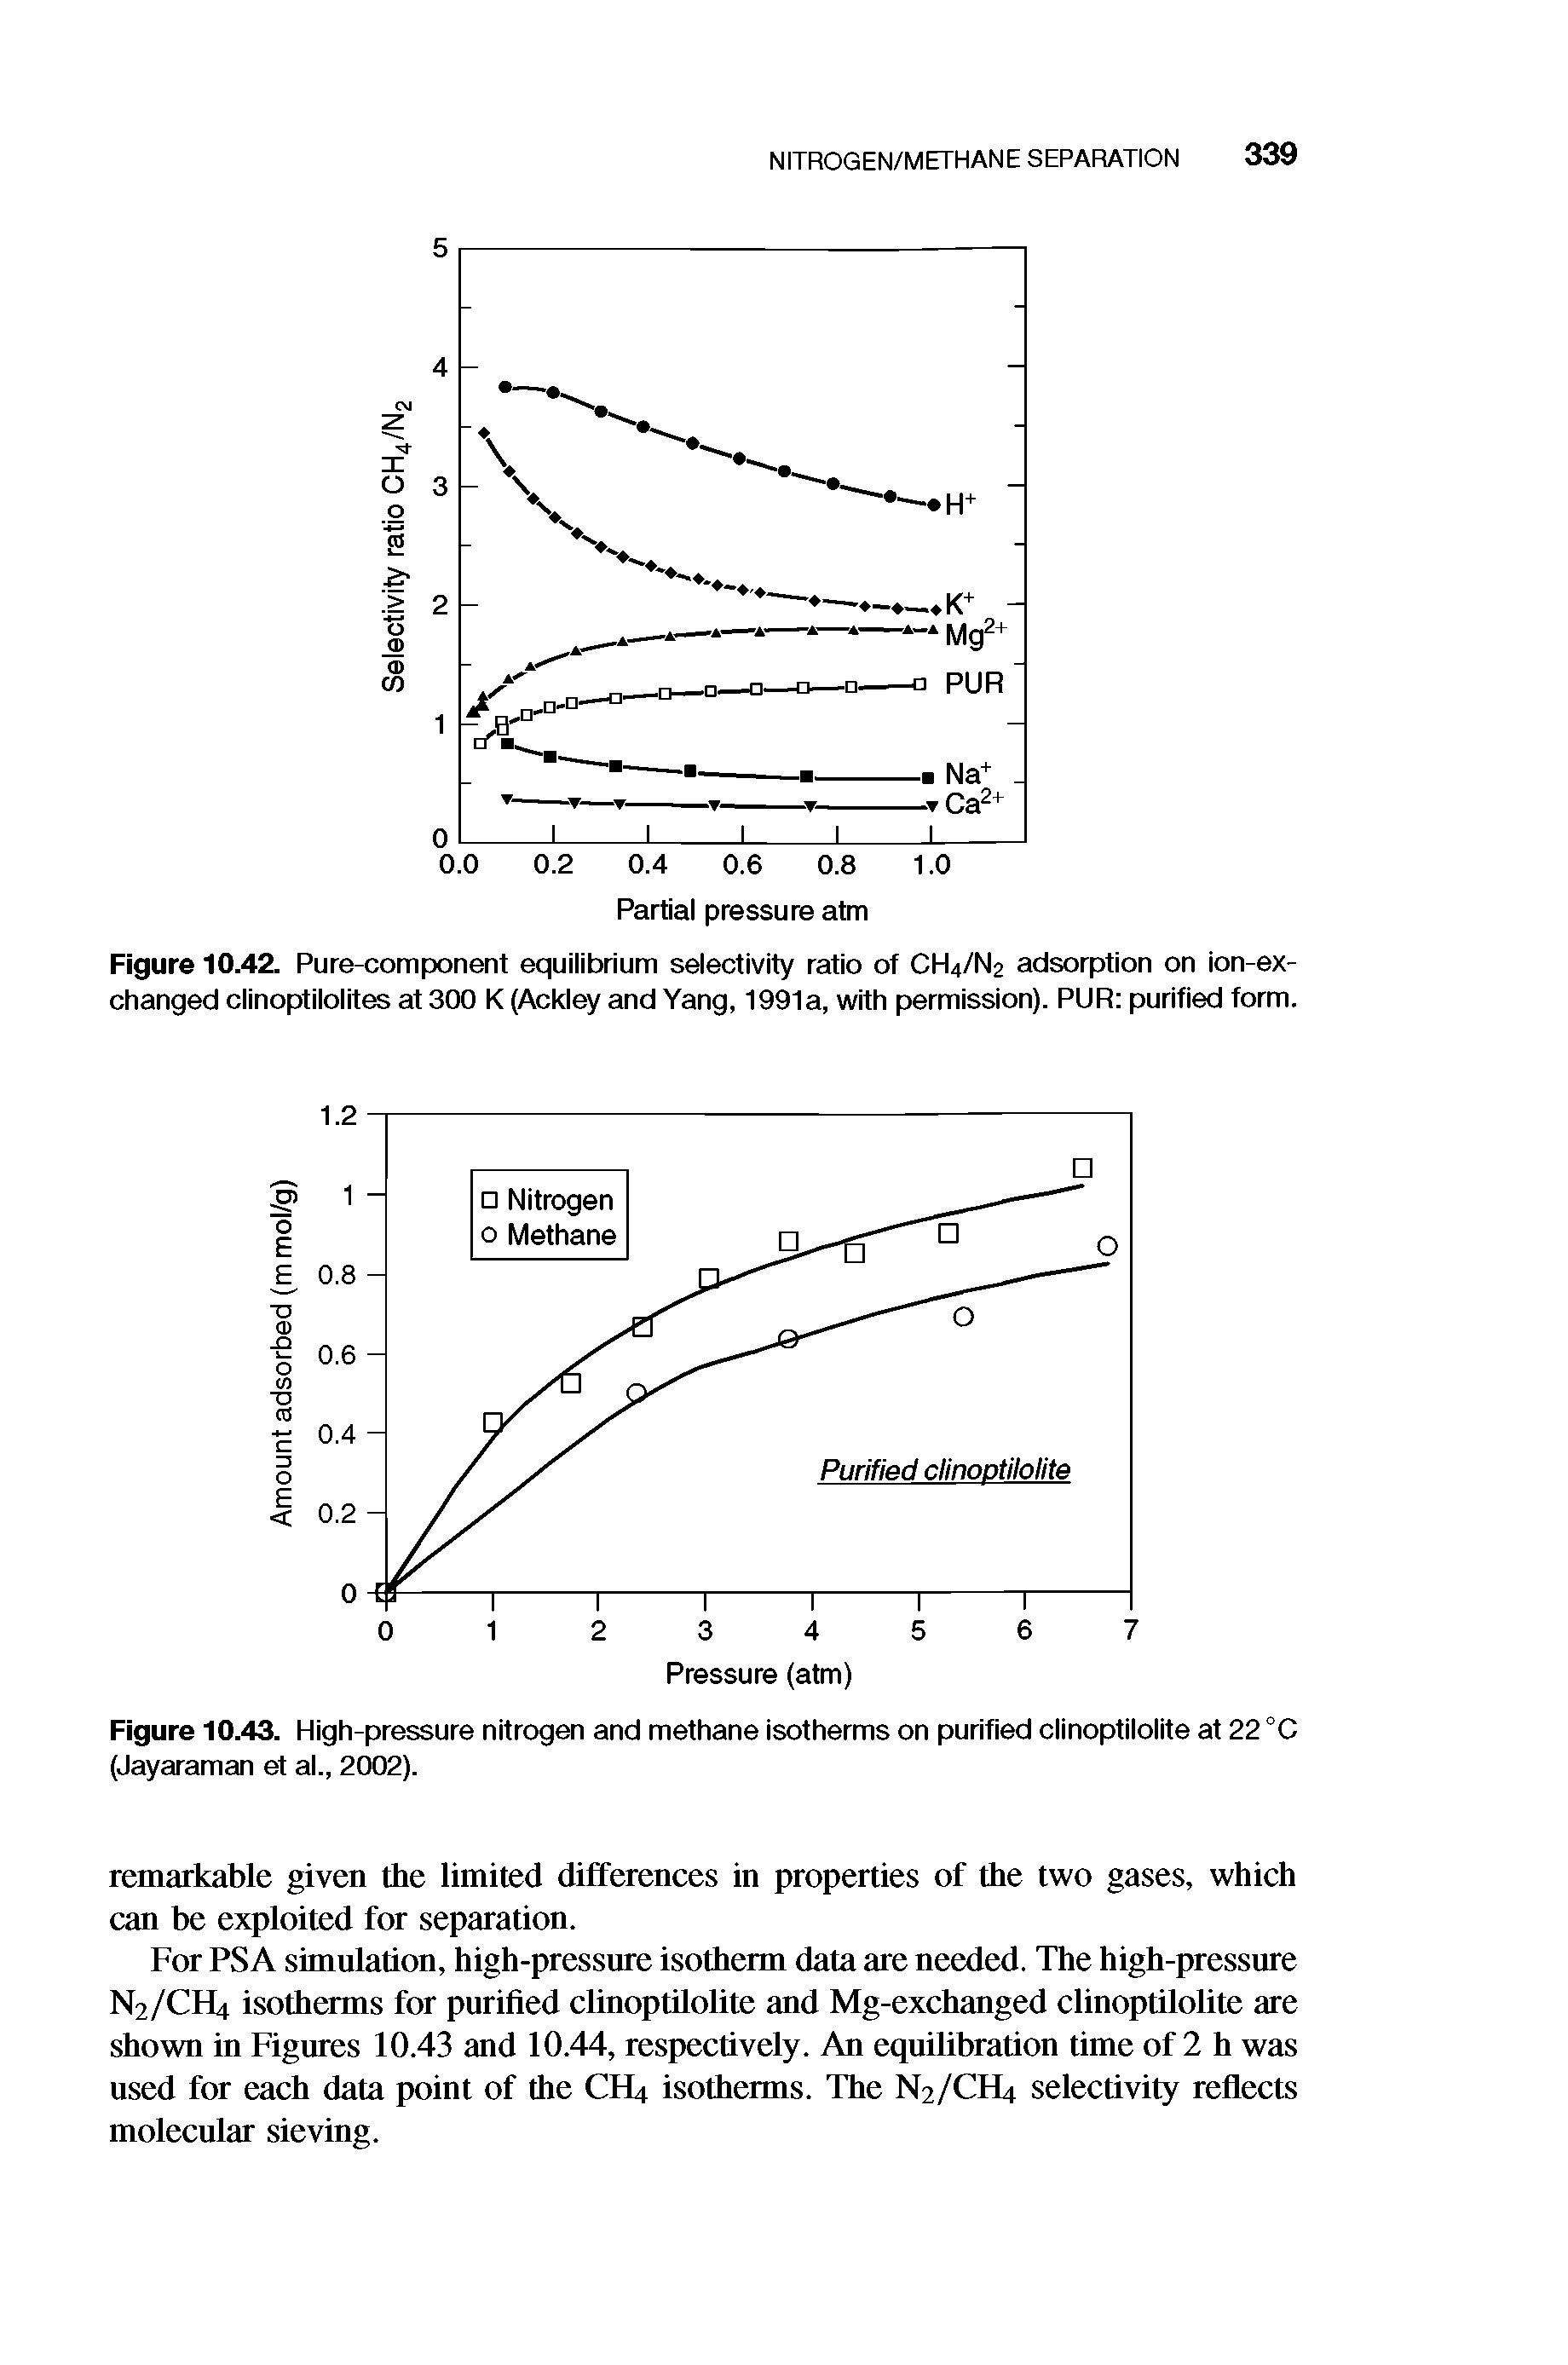 Figure 10.43. High-pressure nitrogen and methane isotherms on purified clinoptilolite at 22 °C (Jayaraman et al., 2002).